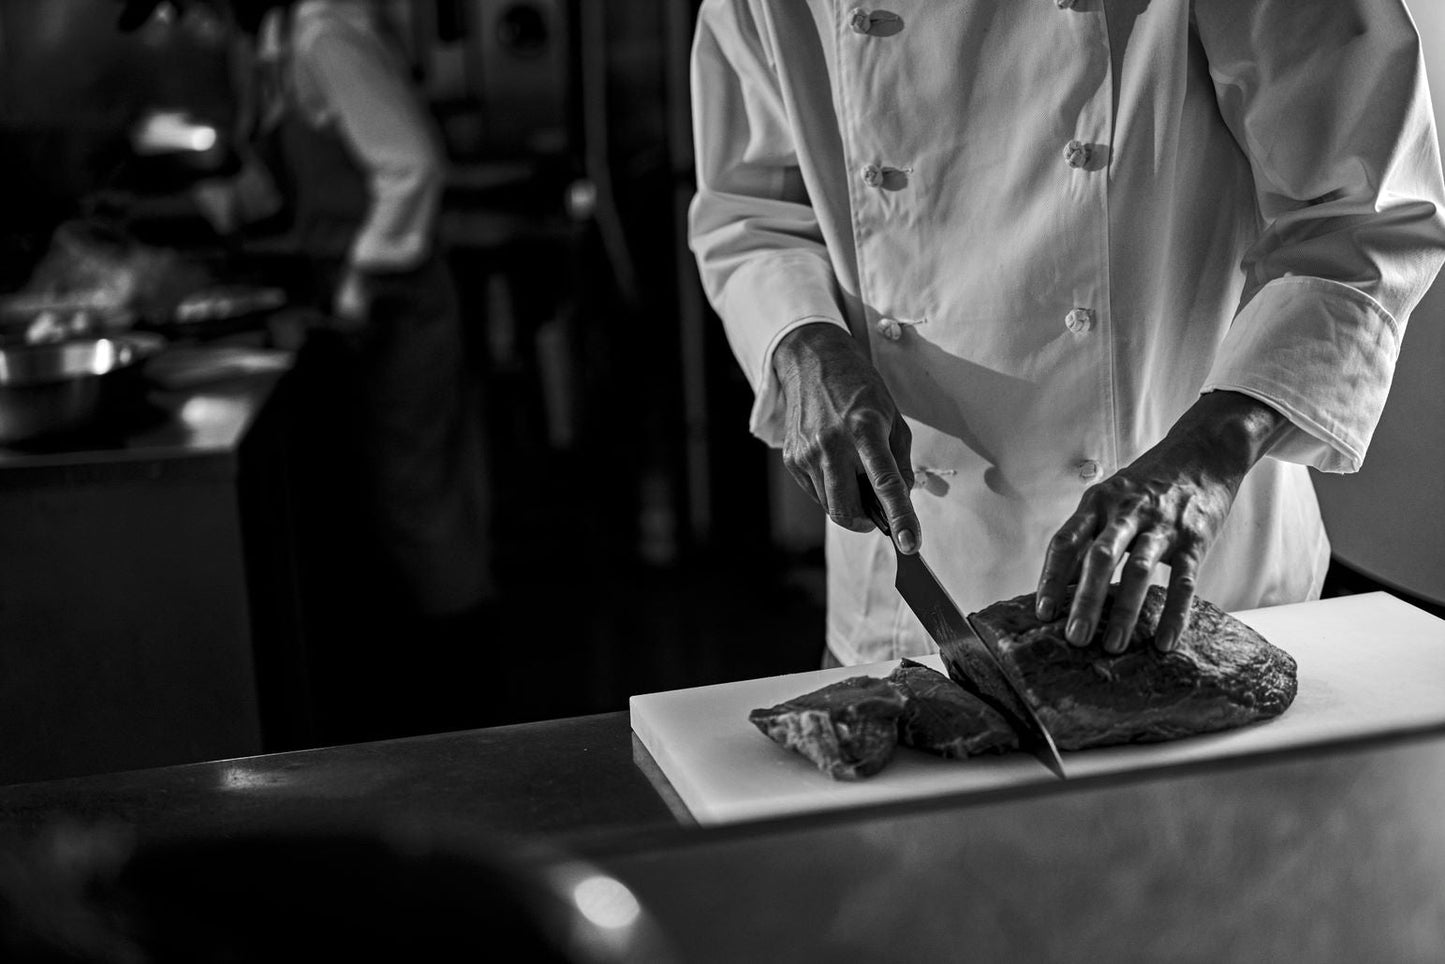 Nagomi Japan PROFESSIONAL Chef Knife – omakase